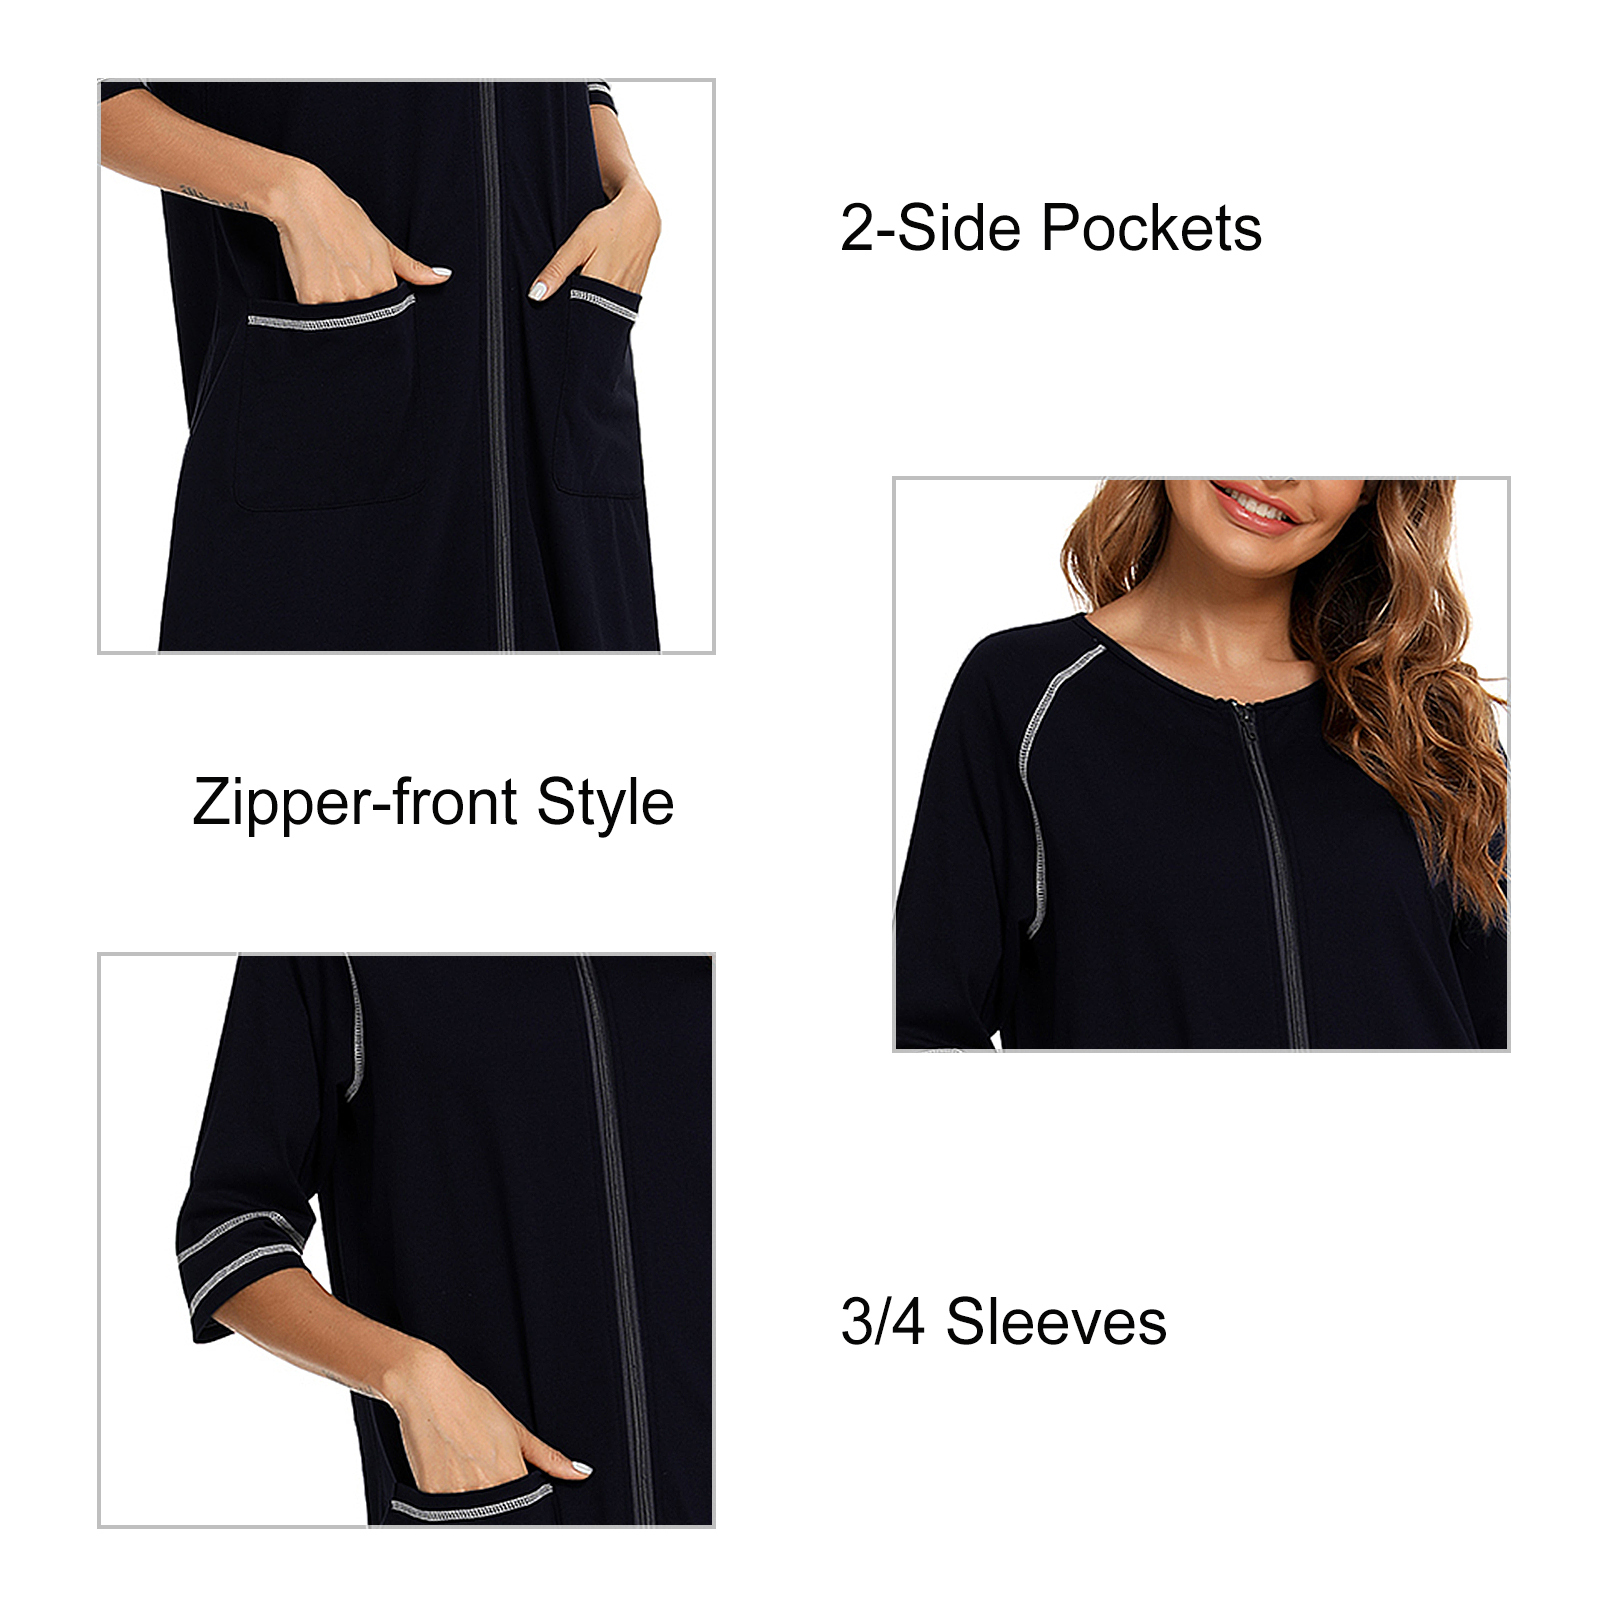 LOFIR Women Zipper Front Robes 3/4 Sleeve Loungewear Pockets Nightgown Loose-Fitting Ladies Long Sleepwear(Black,M) - image 4 of 5